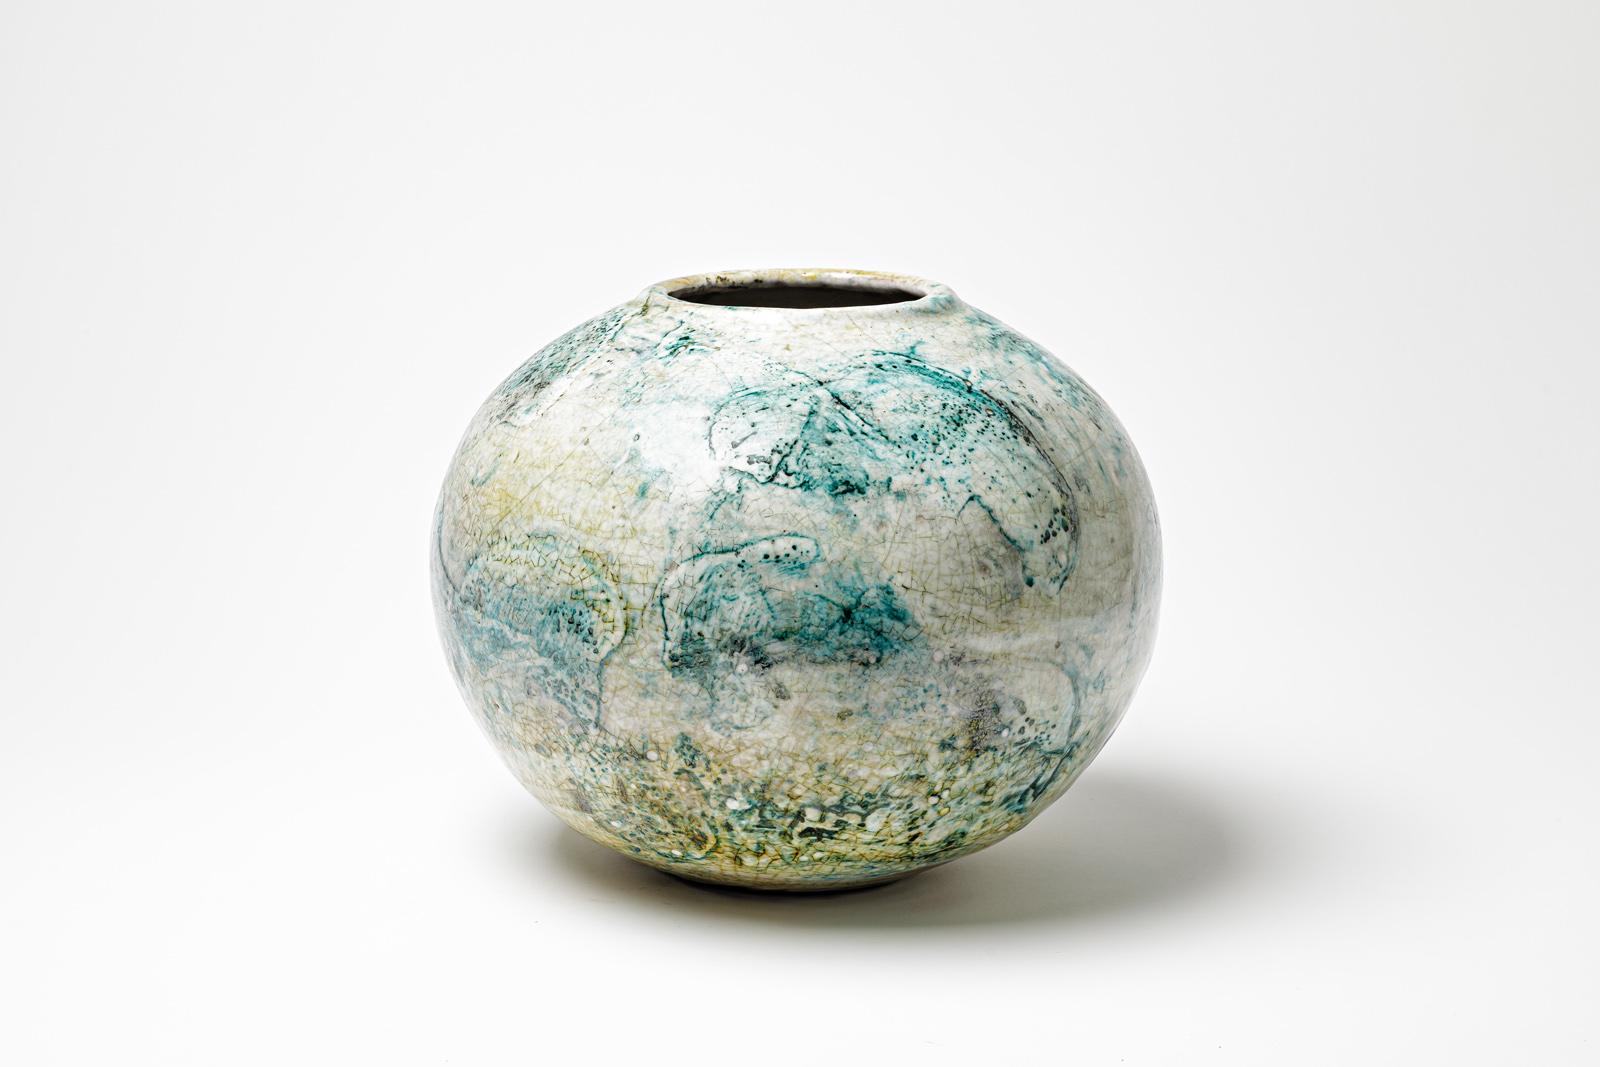 French Green/blue and white glazed ceramic vase by Gisèle Buthod Garçon, circa 1980-90 For Sale